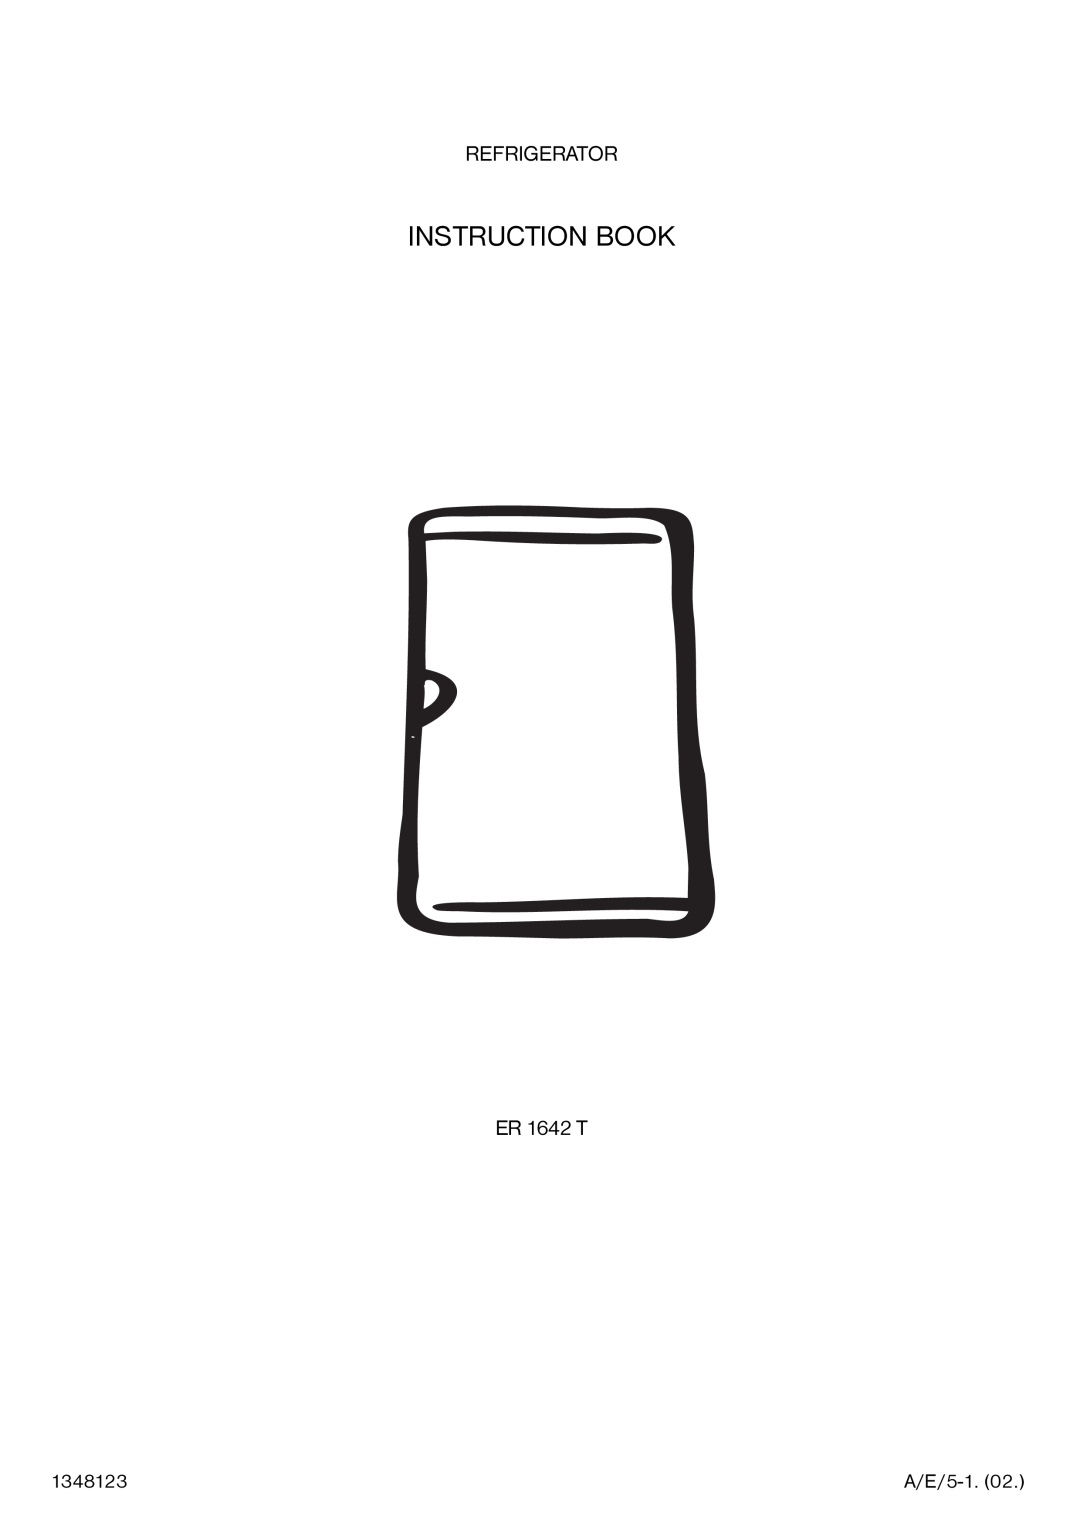 Kelvinator ER 1642 T manual Instruction Book, Refrigerator 